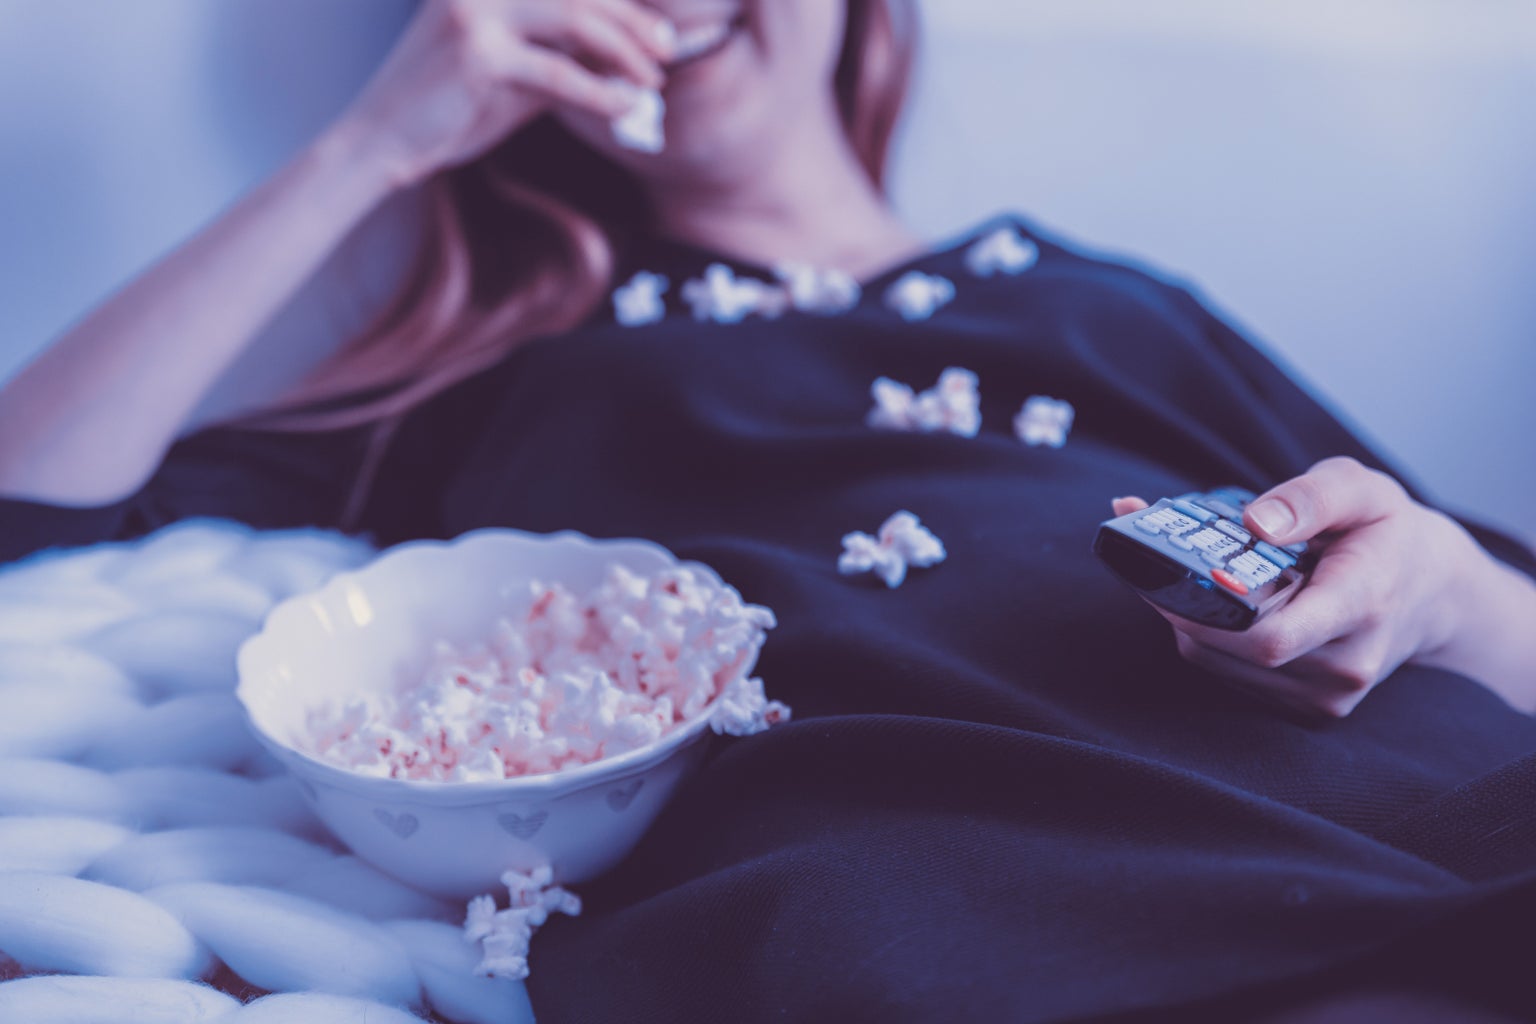 woman lying down eating popcorn